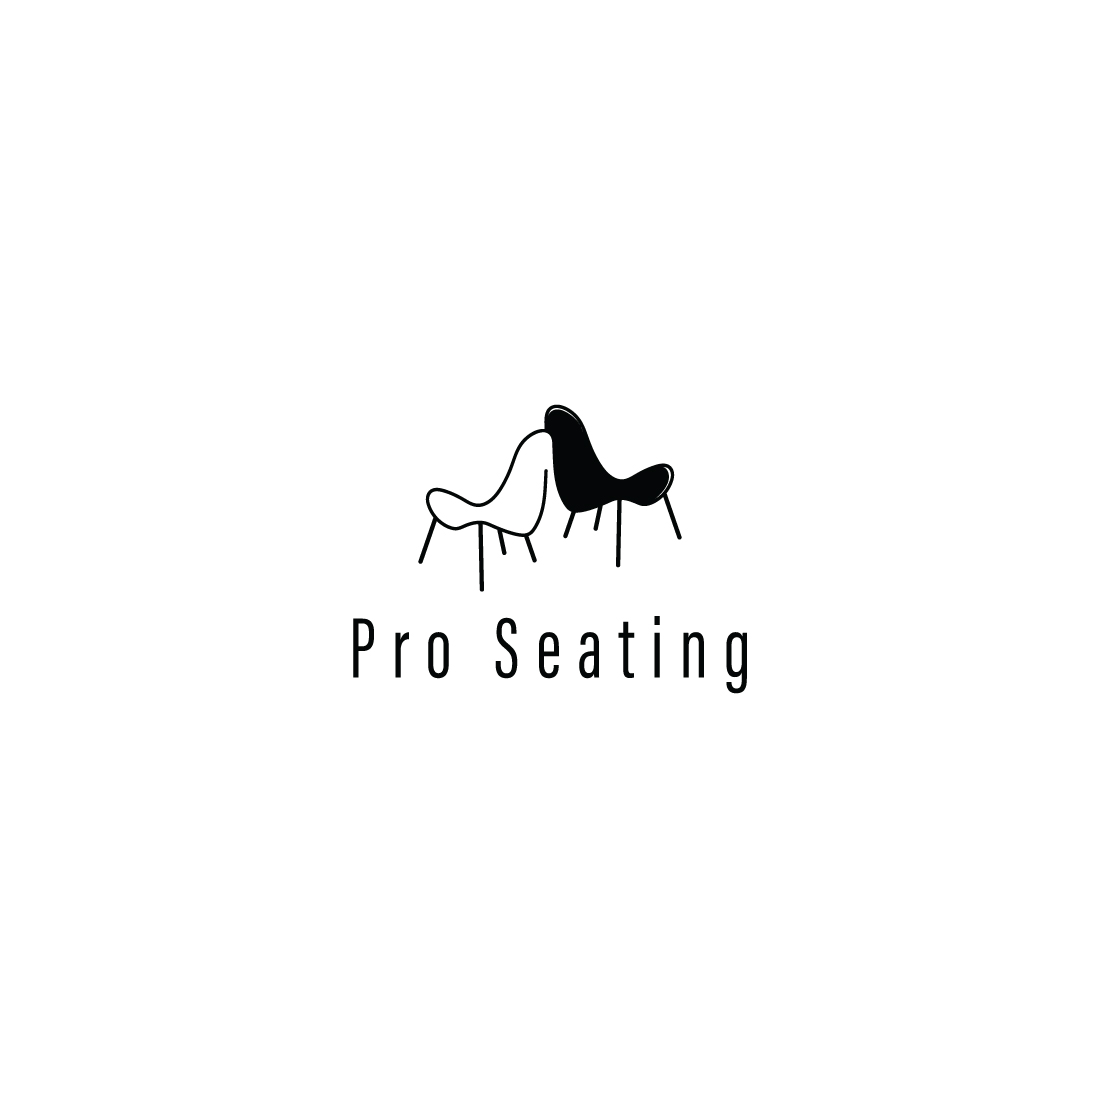 Chair Pro Seating Logo facebook image.